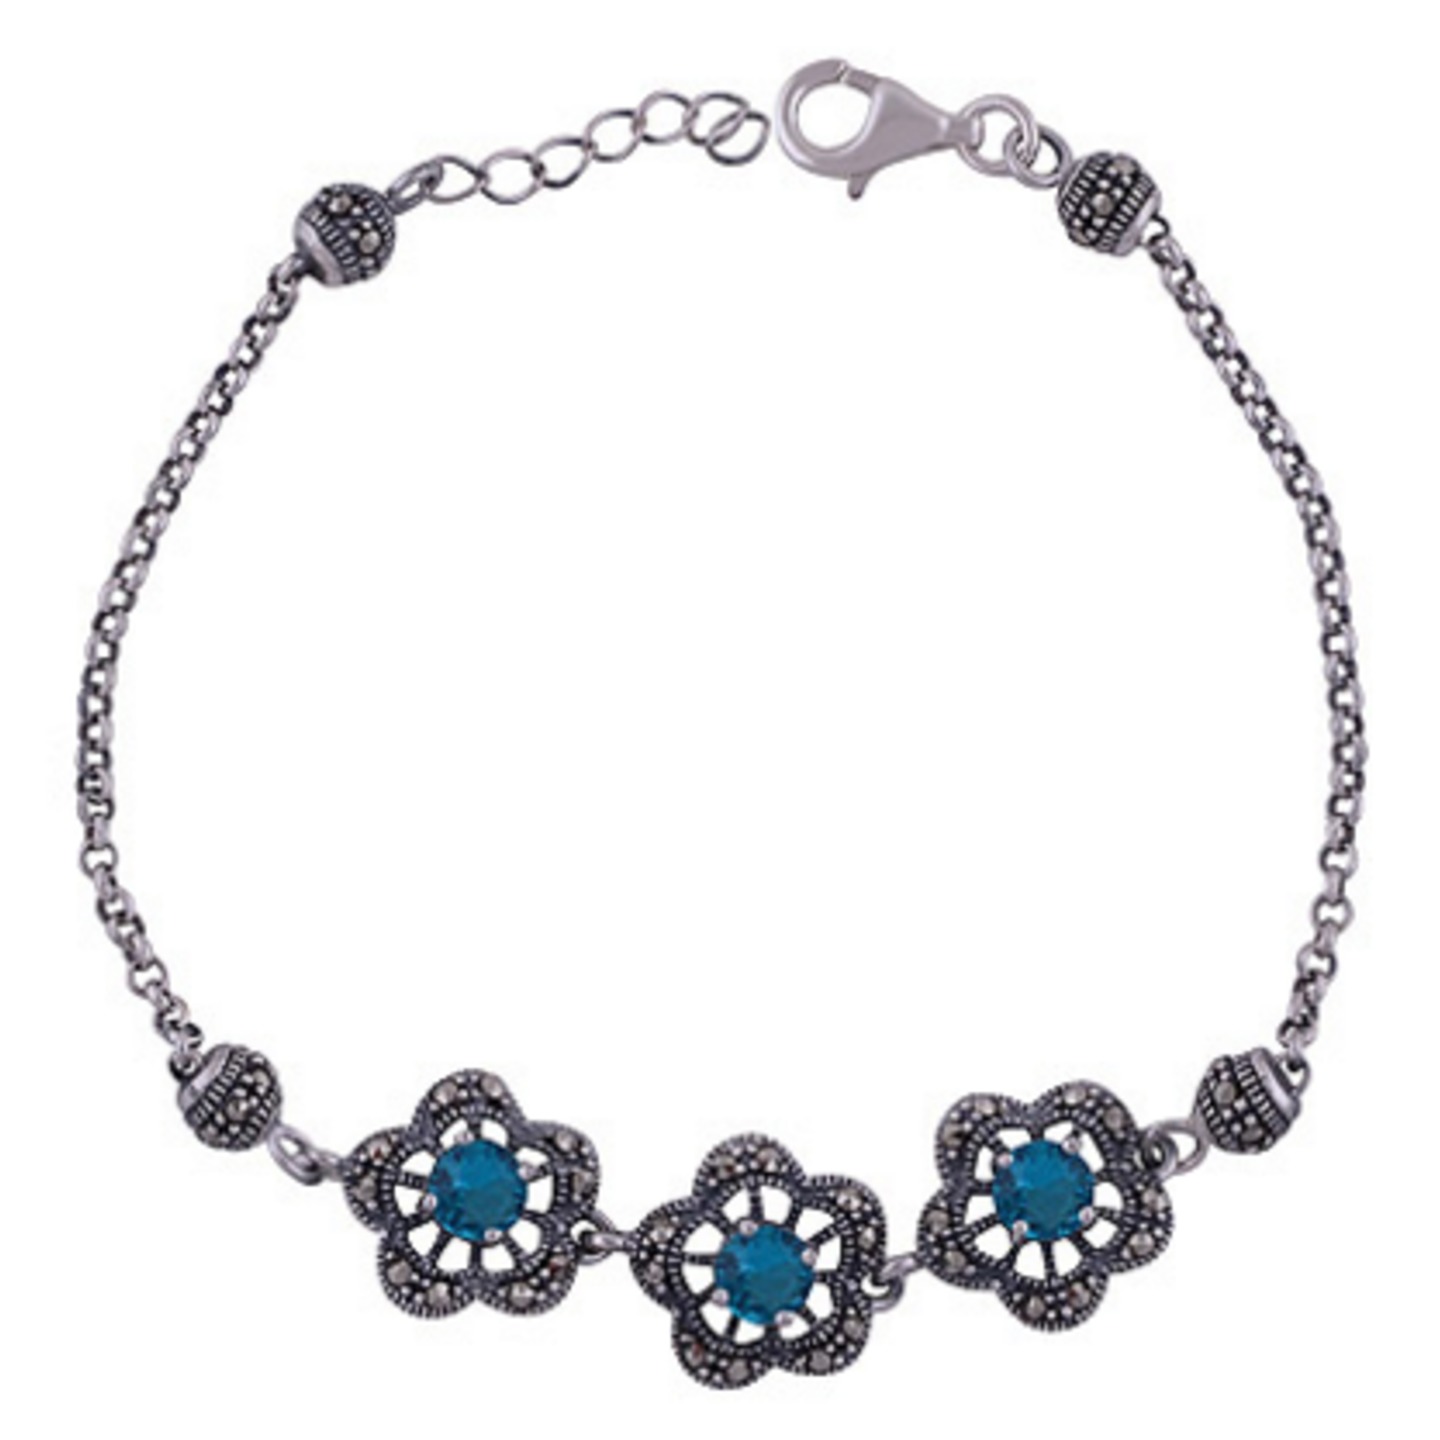 The Zirconia Silver Bracelet